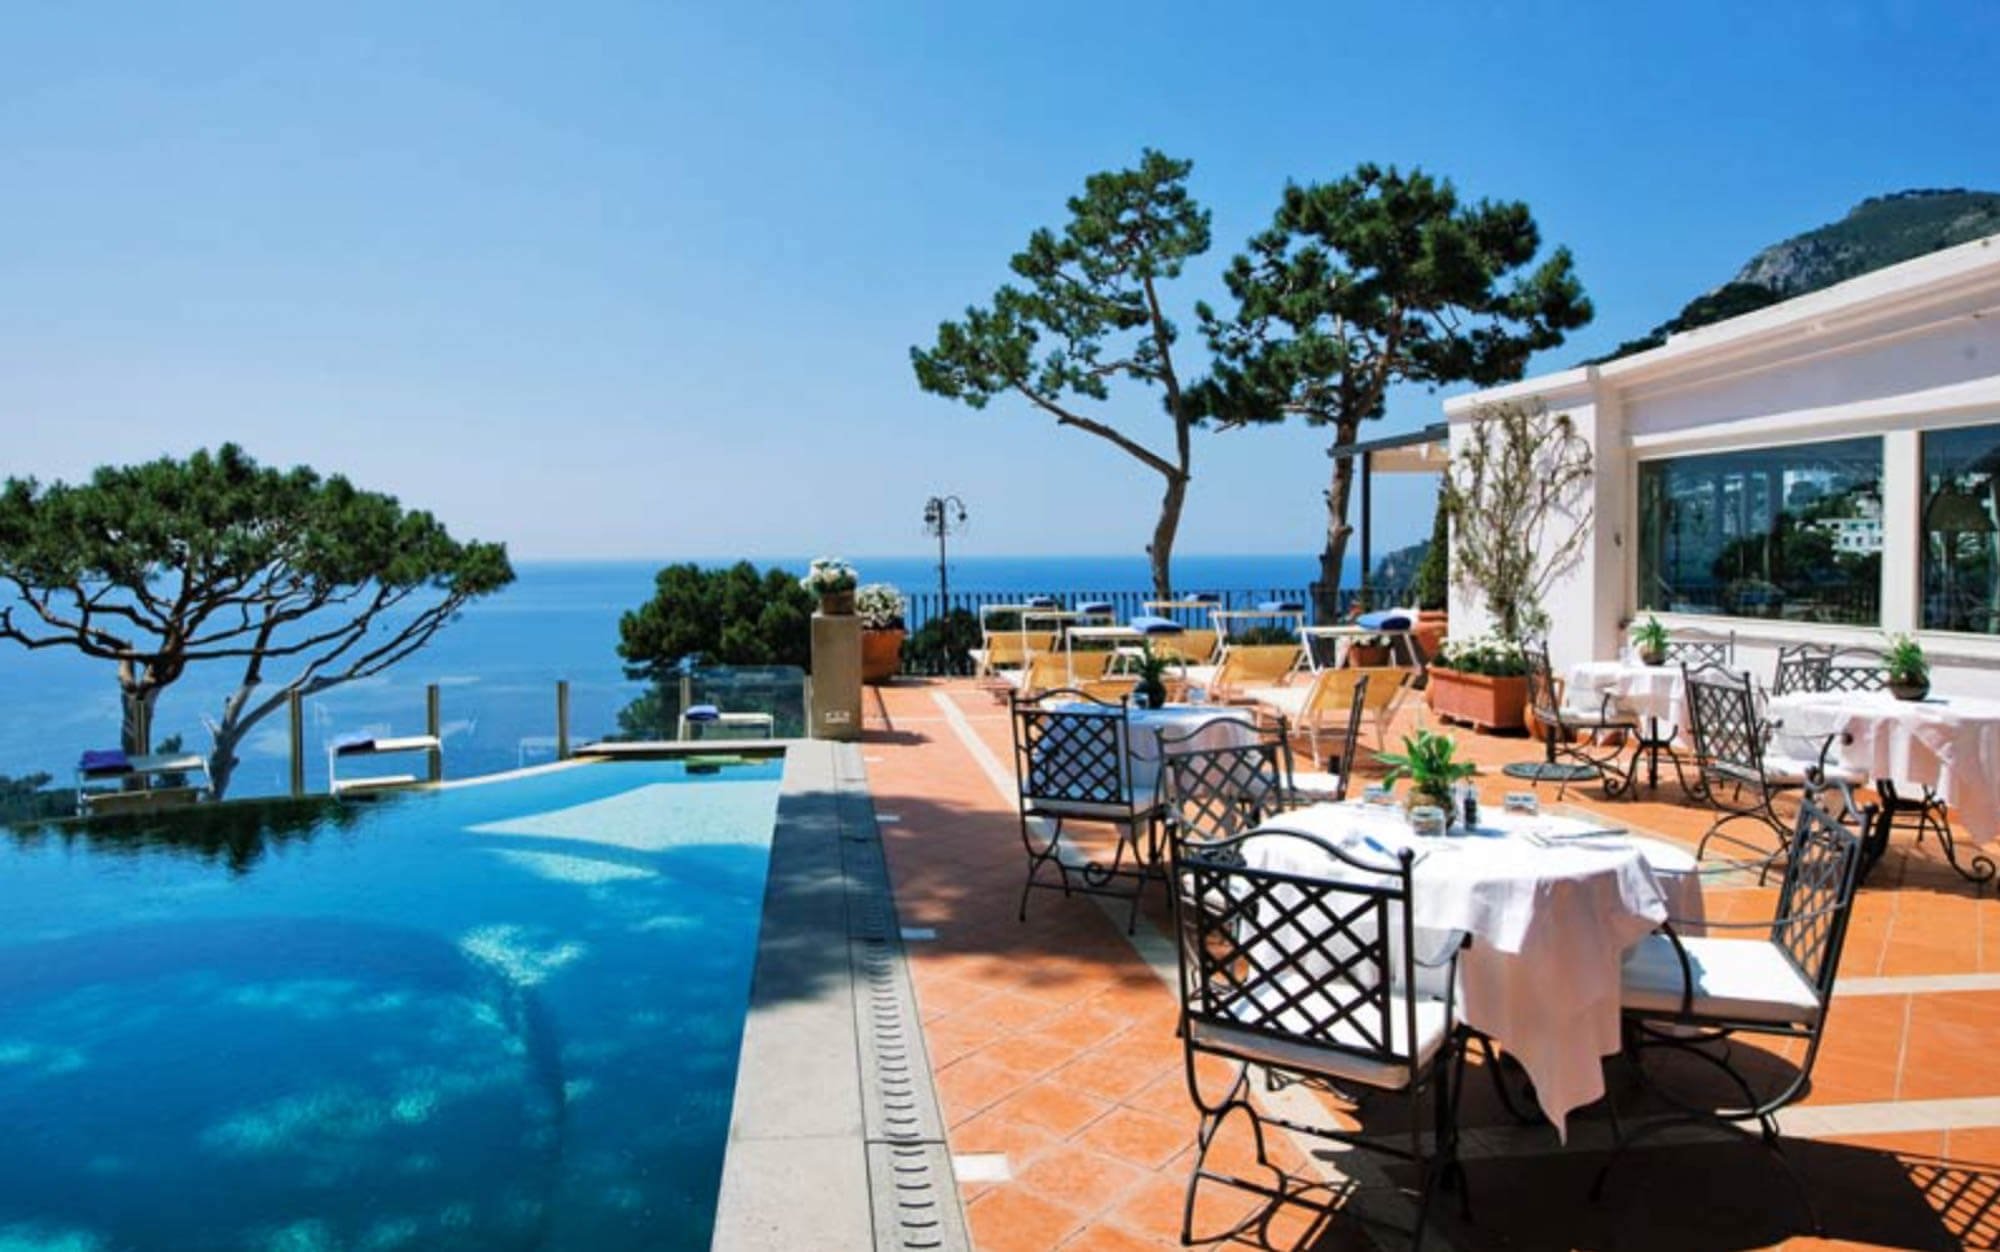 Best hotels Capri Italy: Casa Morgano